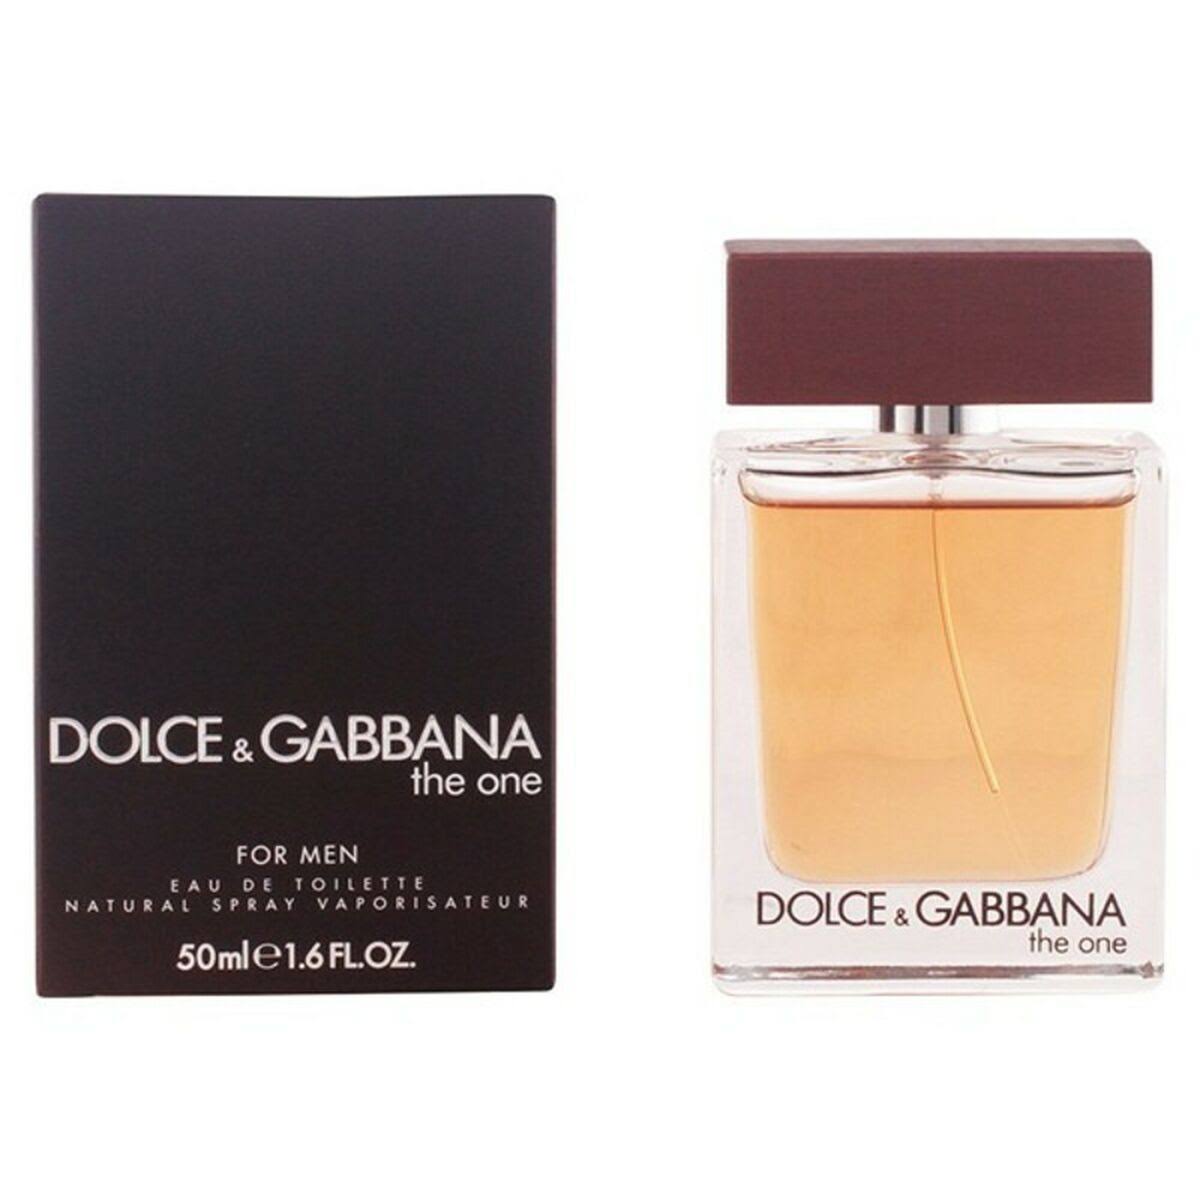 Dolce & Gabbana The One Men's Eau De Toilette Spray - 50ml